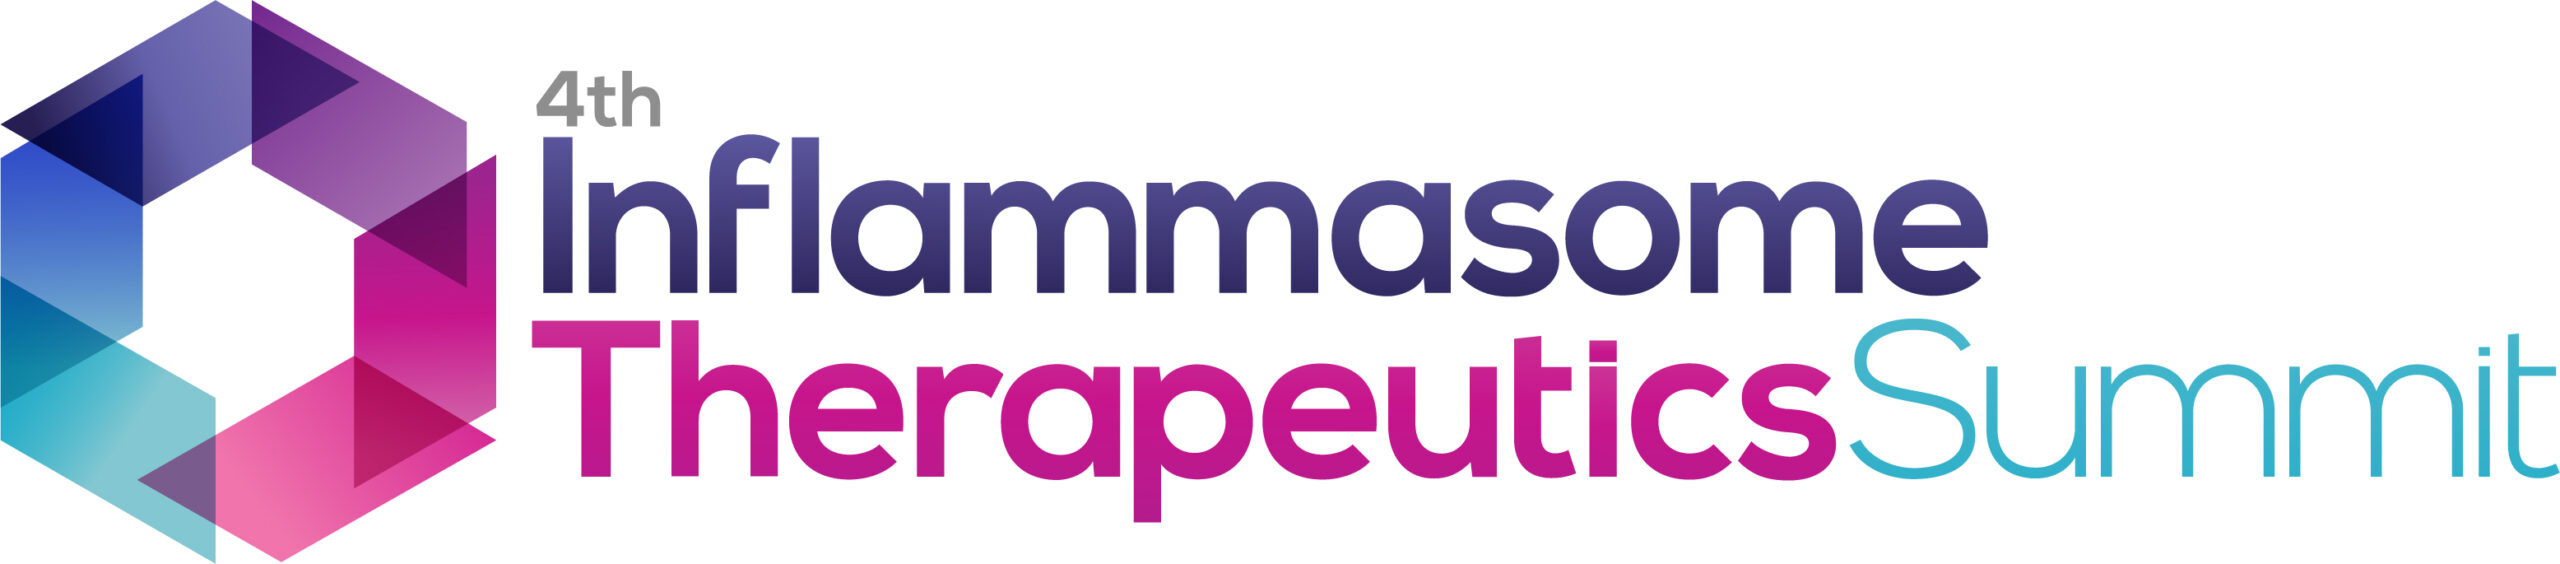 26337 - 4th Inflammasome Therapeutics Summit